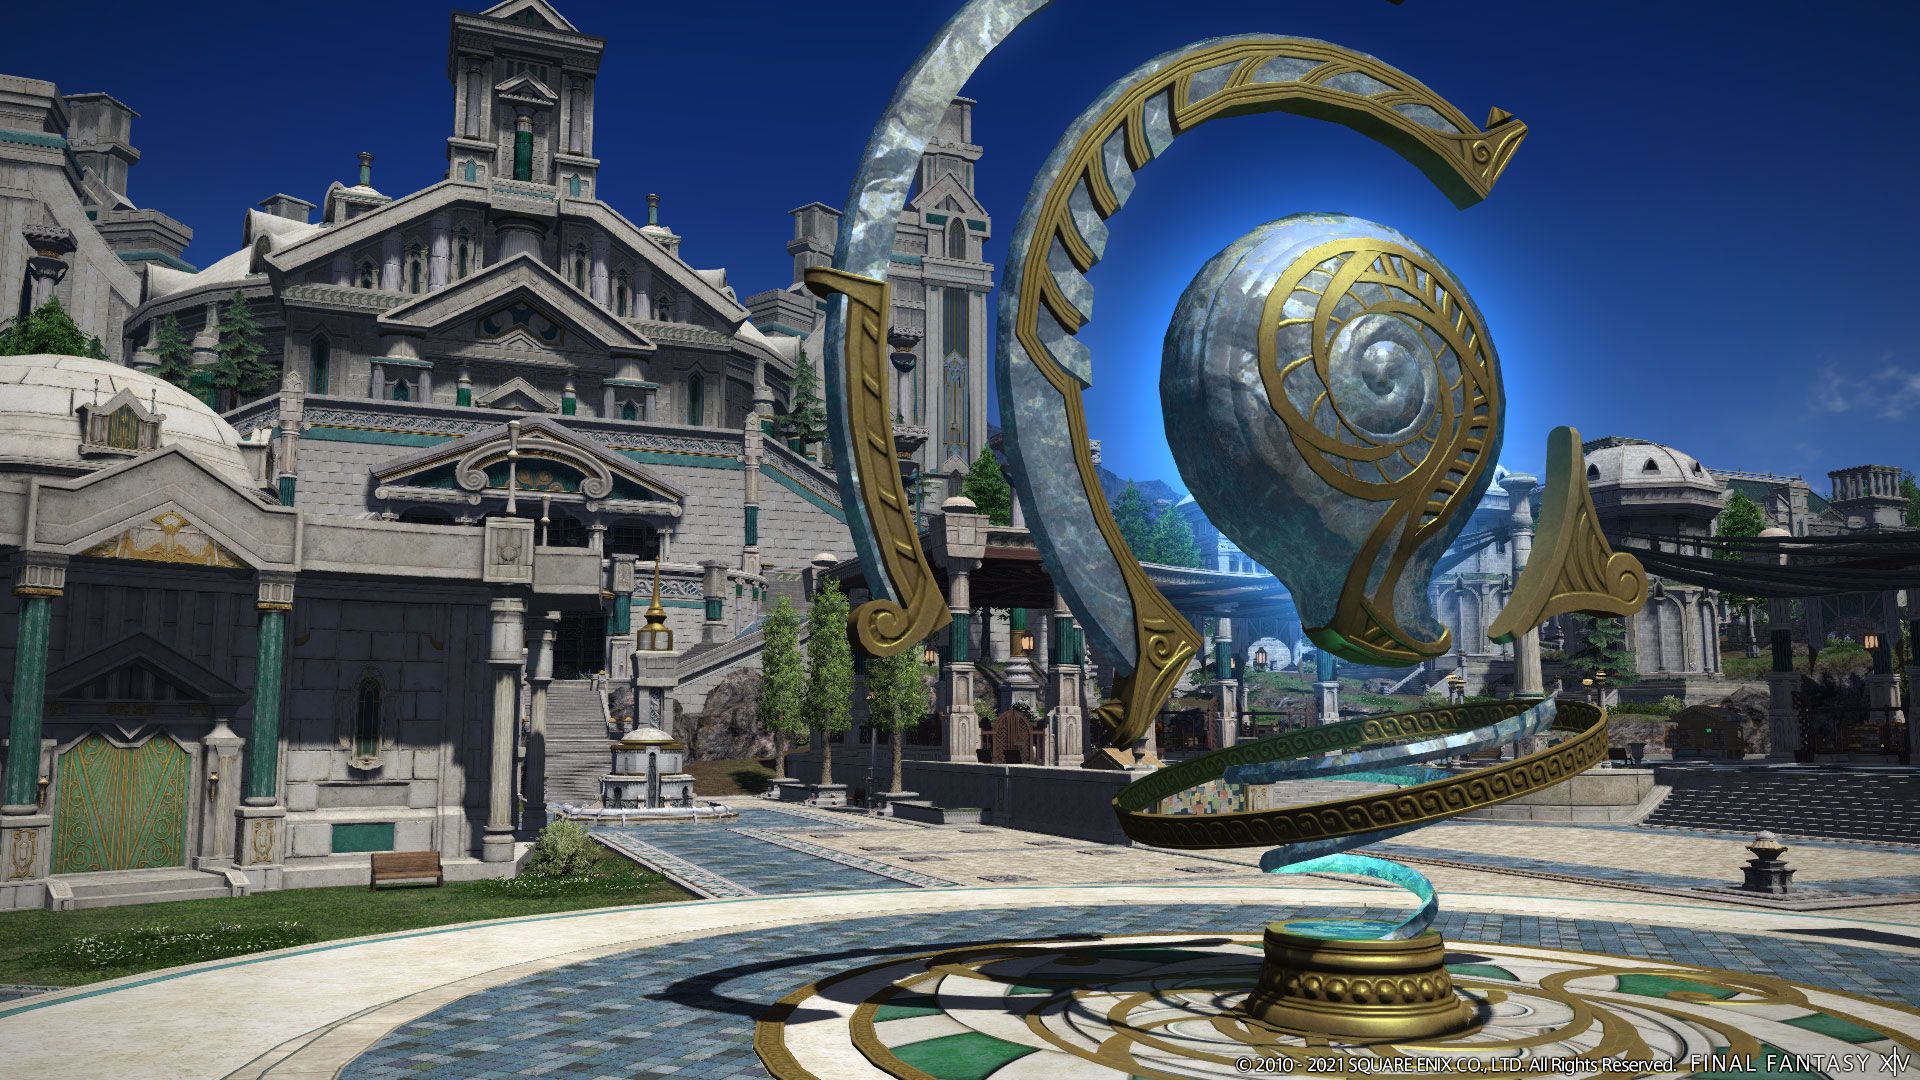 Final Fantasy XIV: Endwalker's new hub world, Old Sharlayan